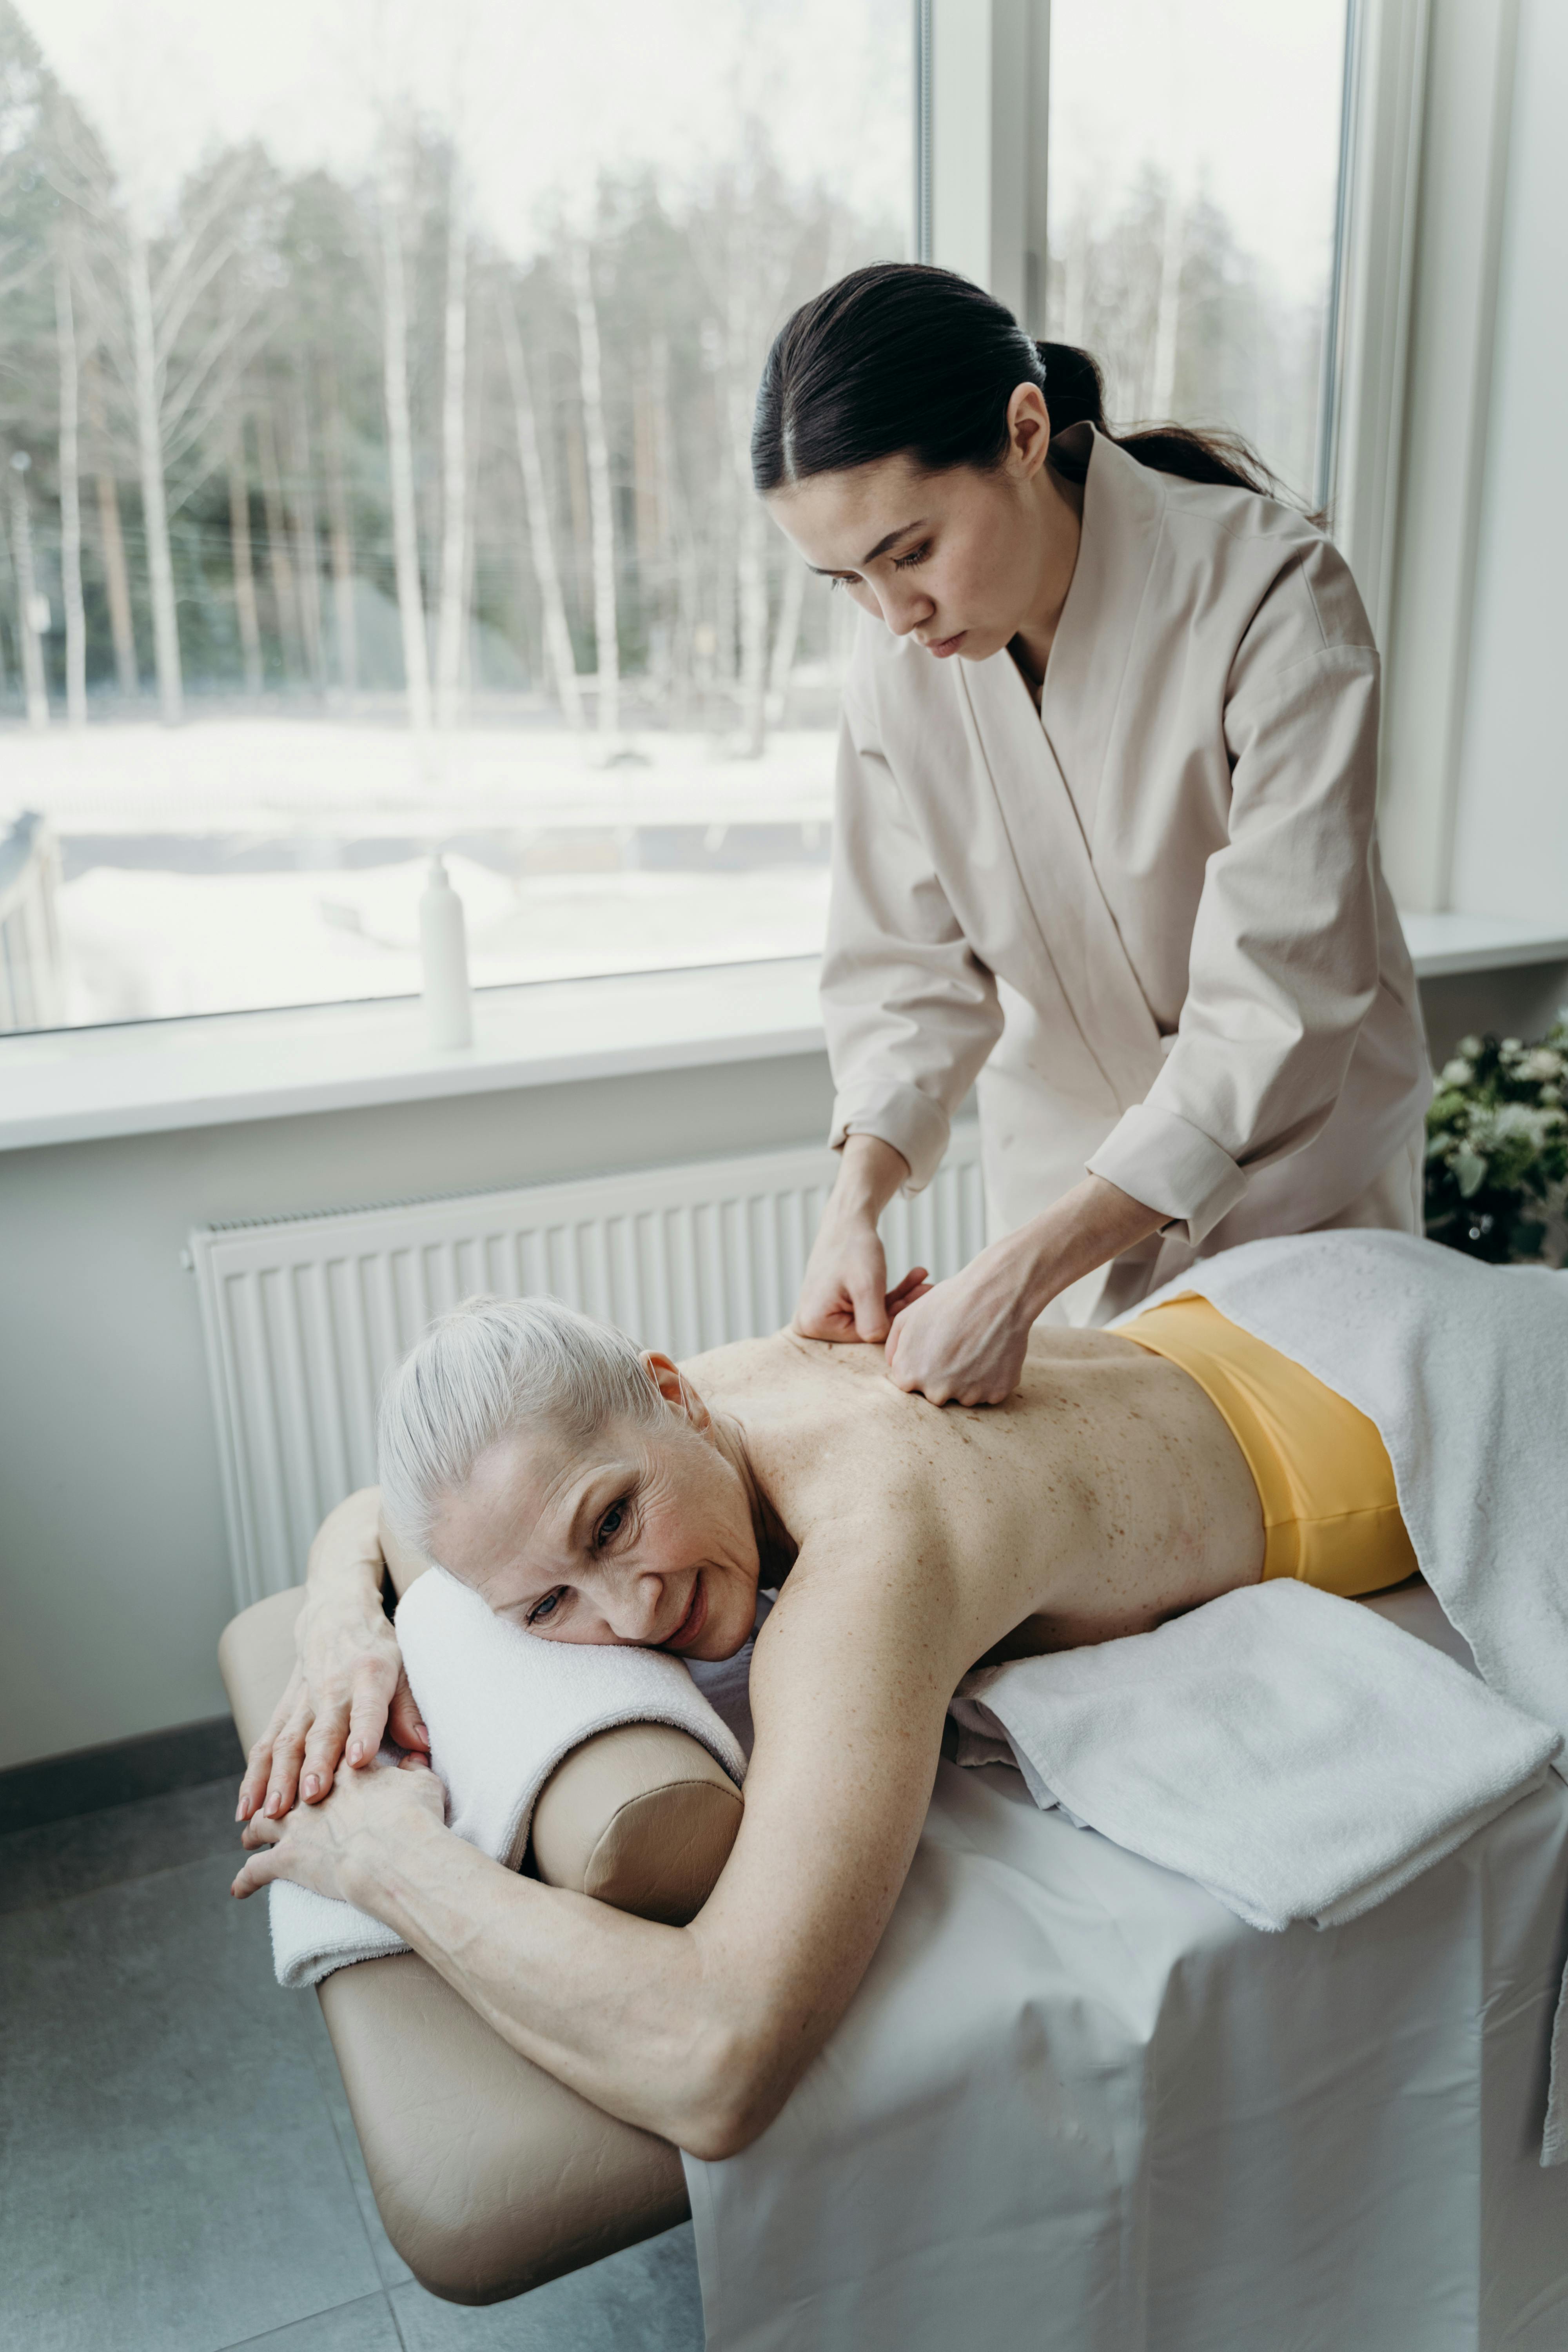 An elderly man getting a back massage, Stock image